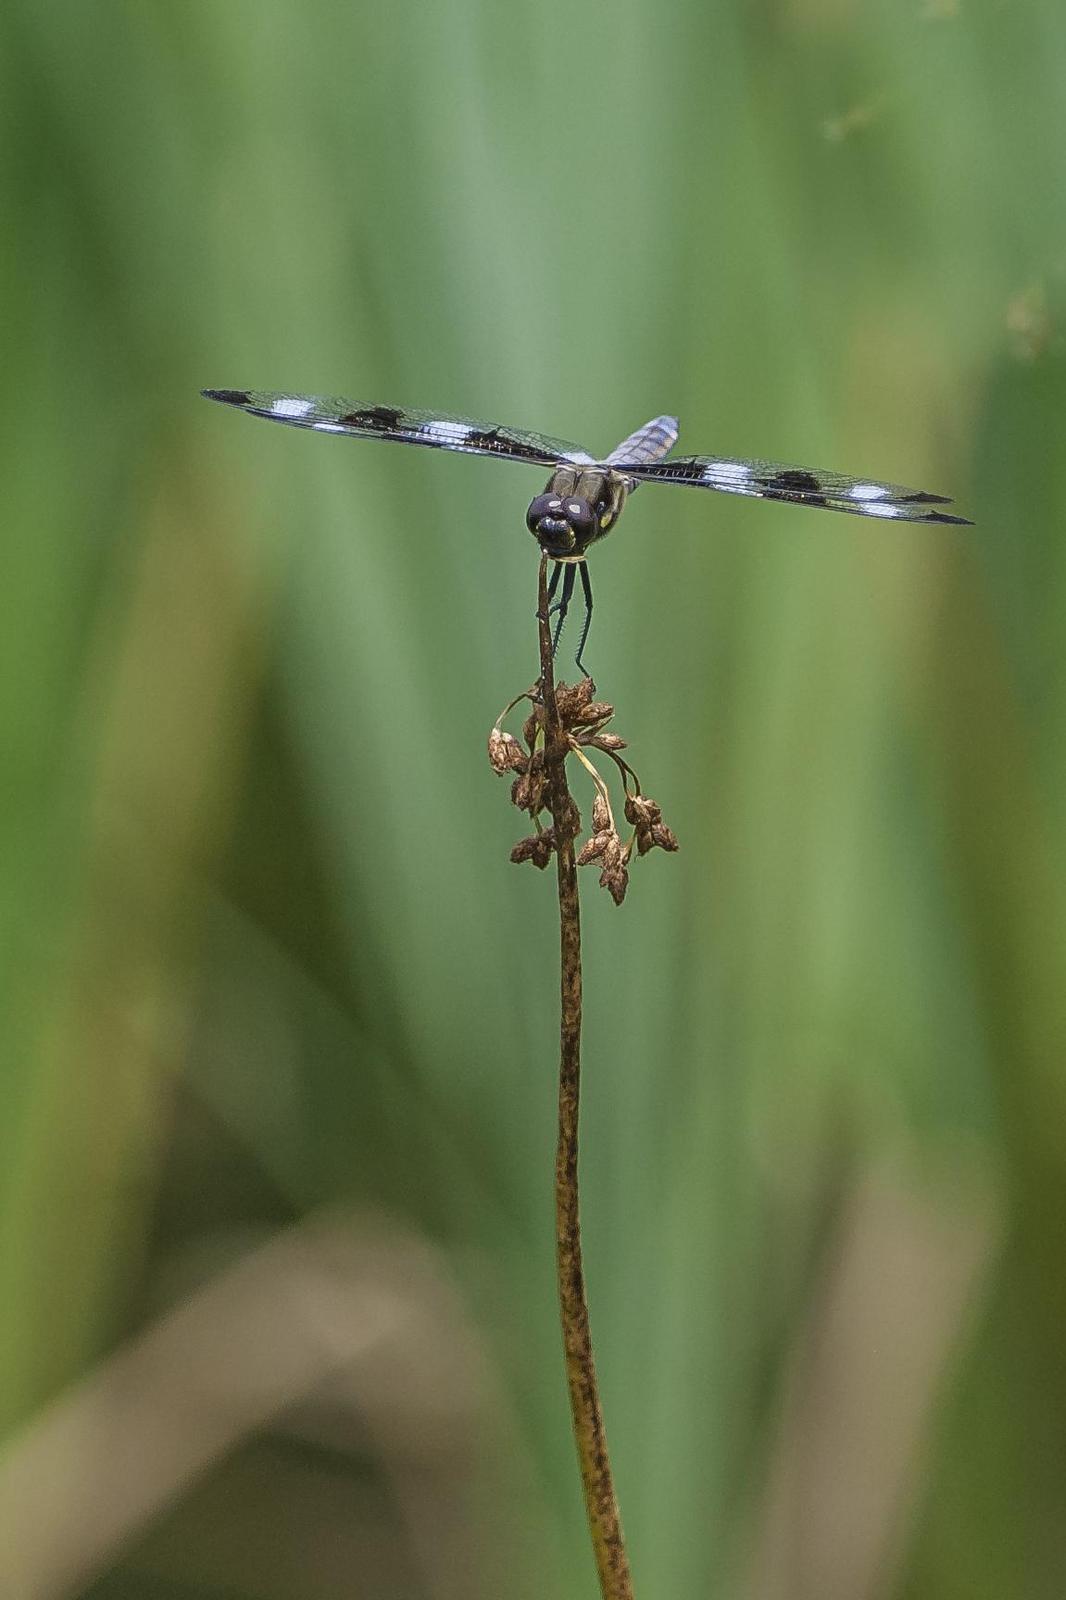 Dragonfly Photo by Mason Rose